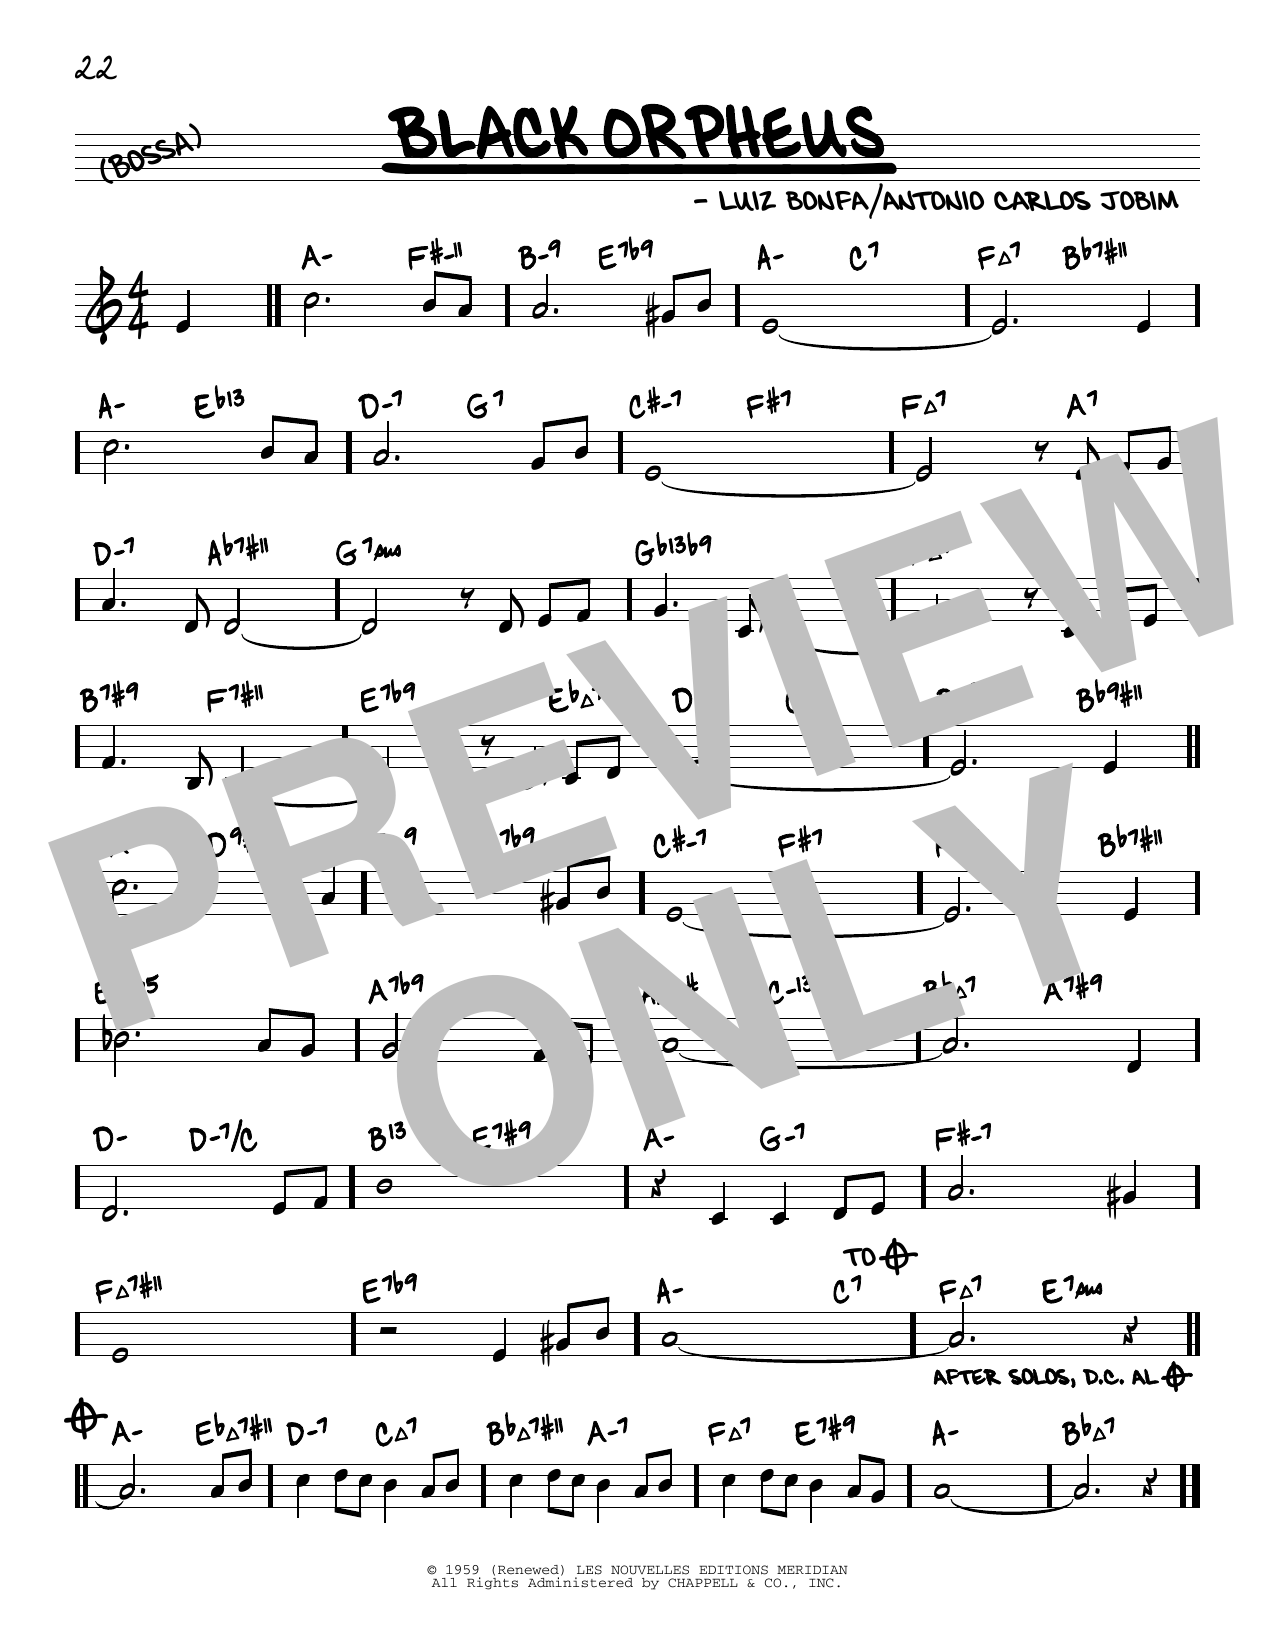 Antonio Carlos Jobim Black Orpheus (arr. David Hazeltine) Sheet Music Notes & Chords for Real Book – Enhanced Chords - Download or Print PDF